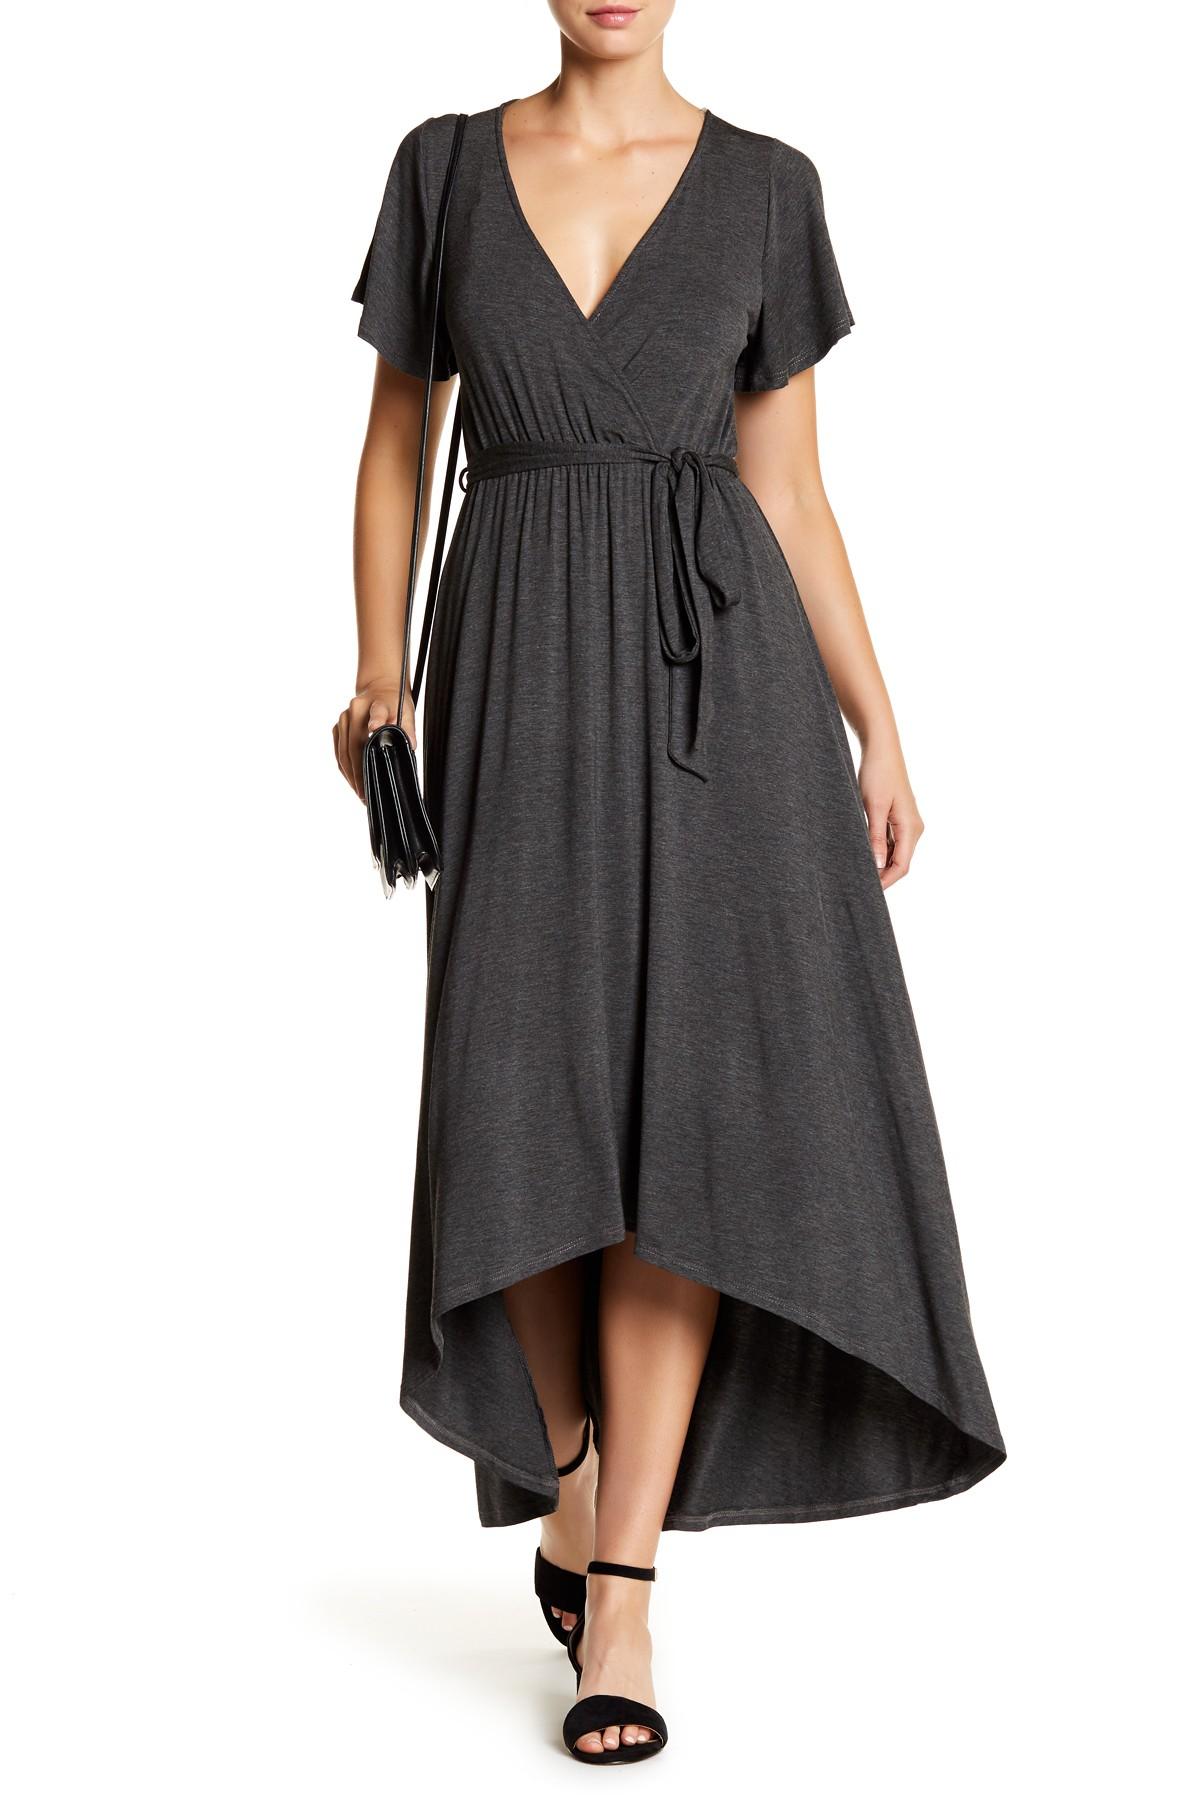 West Kei Synthetic High/low Knit Wrap Dress in Black - Lyst